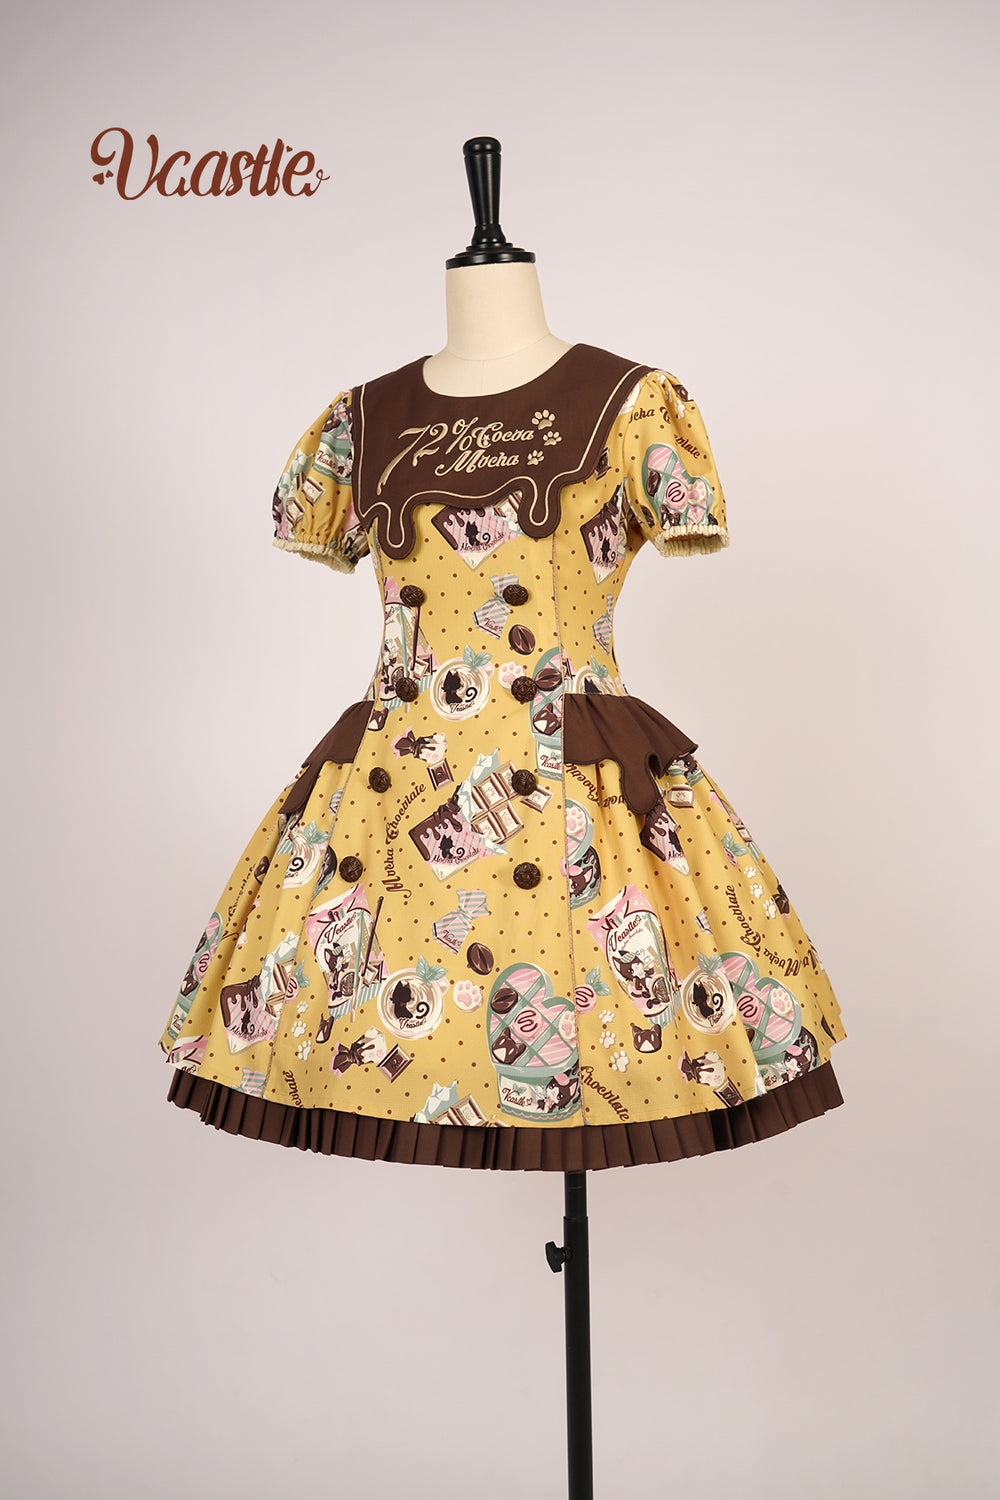 Vcastle~Mocha Choc~Kawaii Lolita Slopette Dress Suit Multicolors S yellow OP 